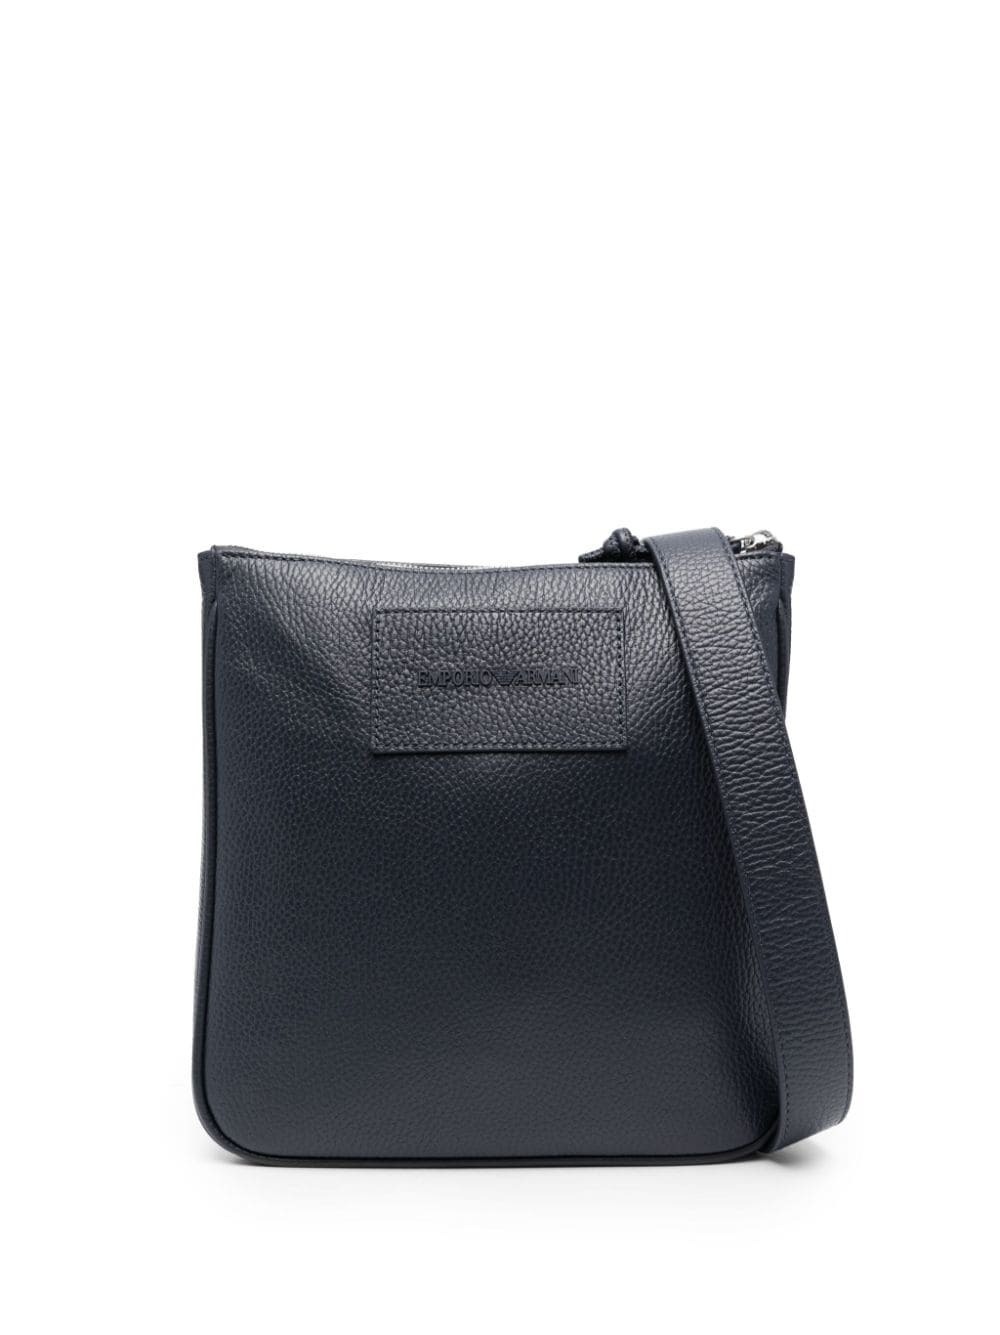 Photo: EMPORIO ARMANI - Leather Crossbody Bag